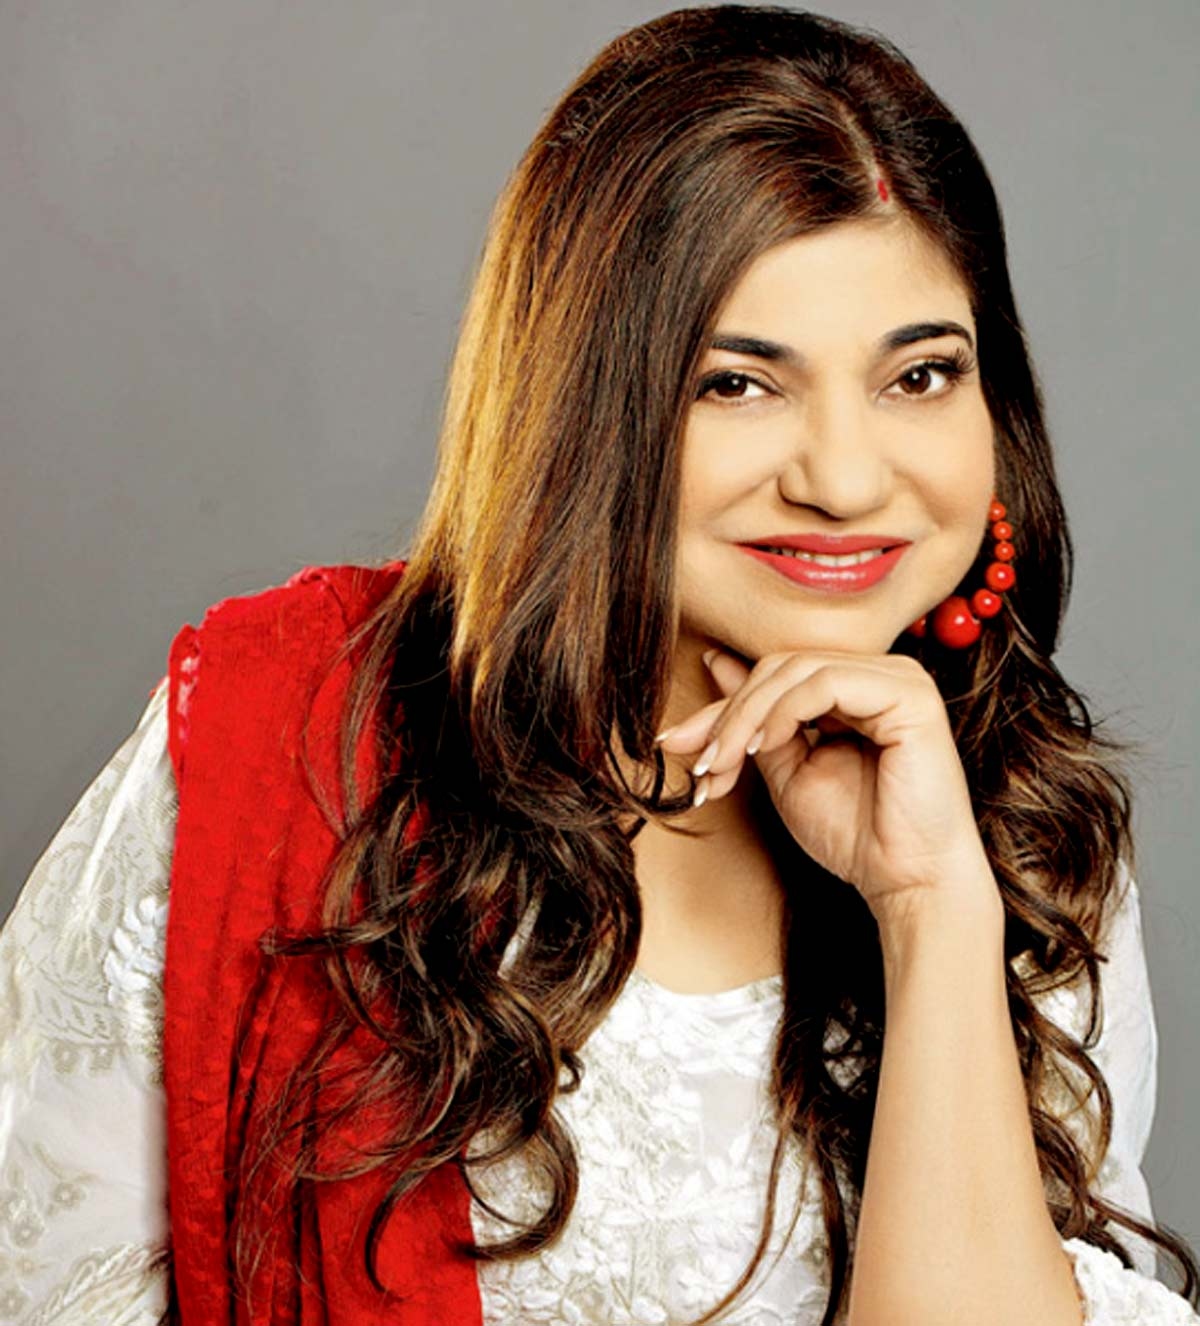 Star Singer Alka Yagnik diagnosed with rare hearing disorder